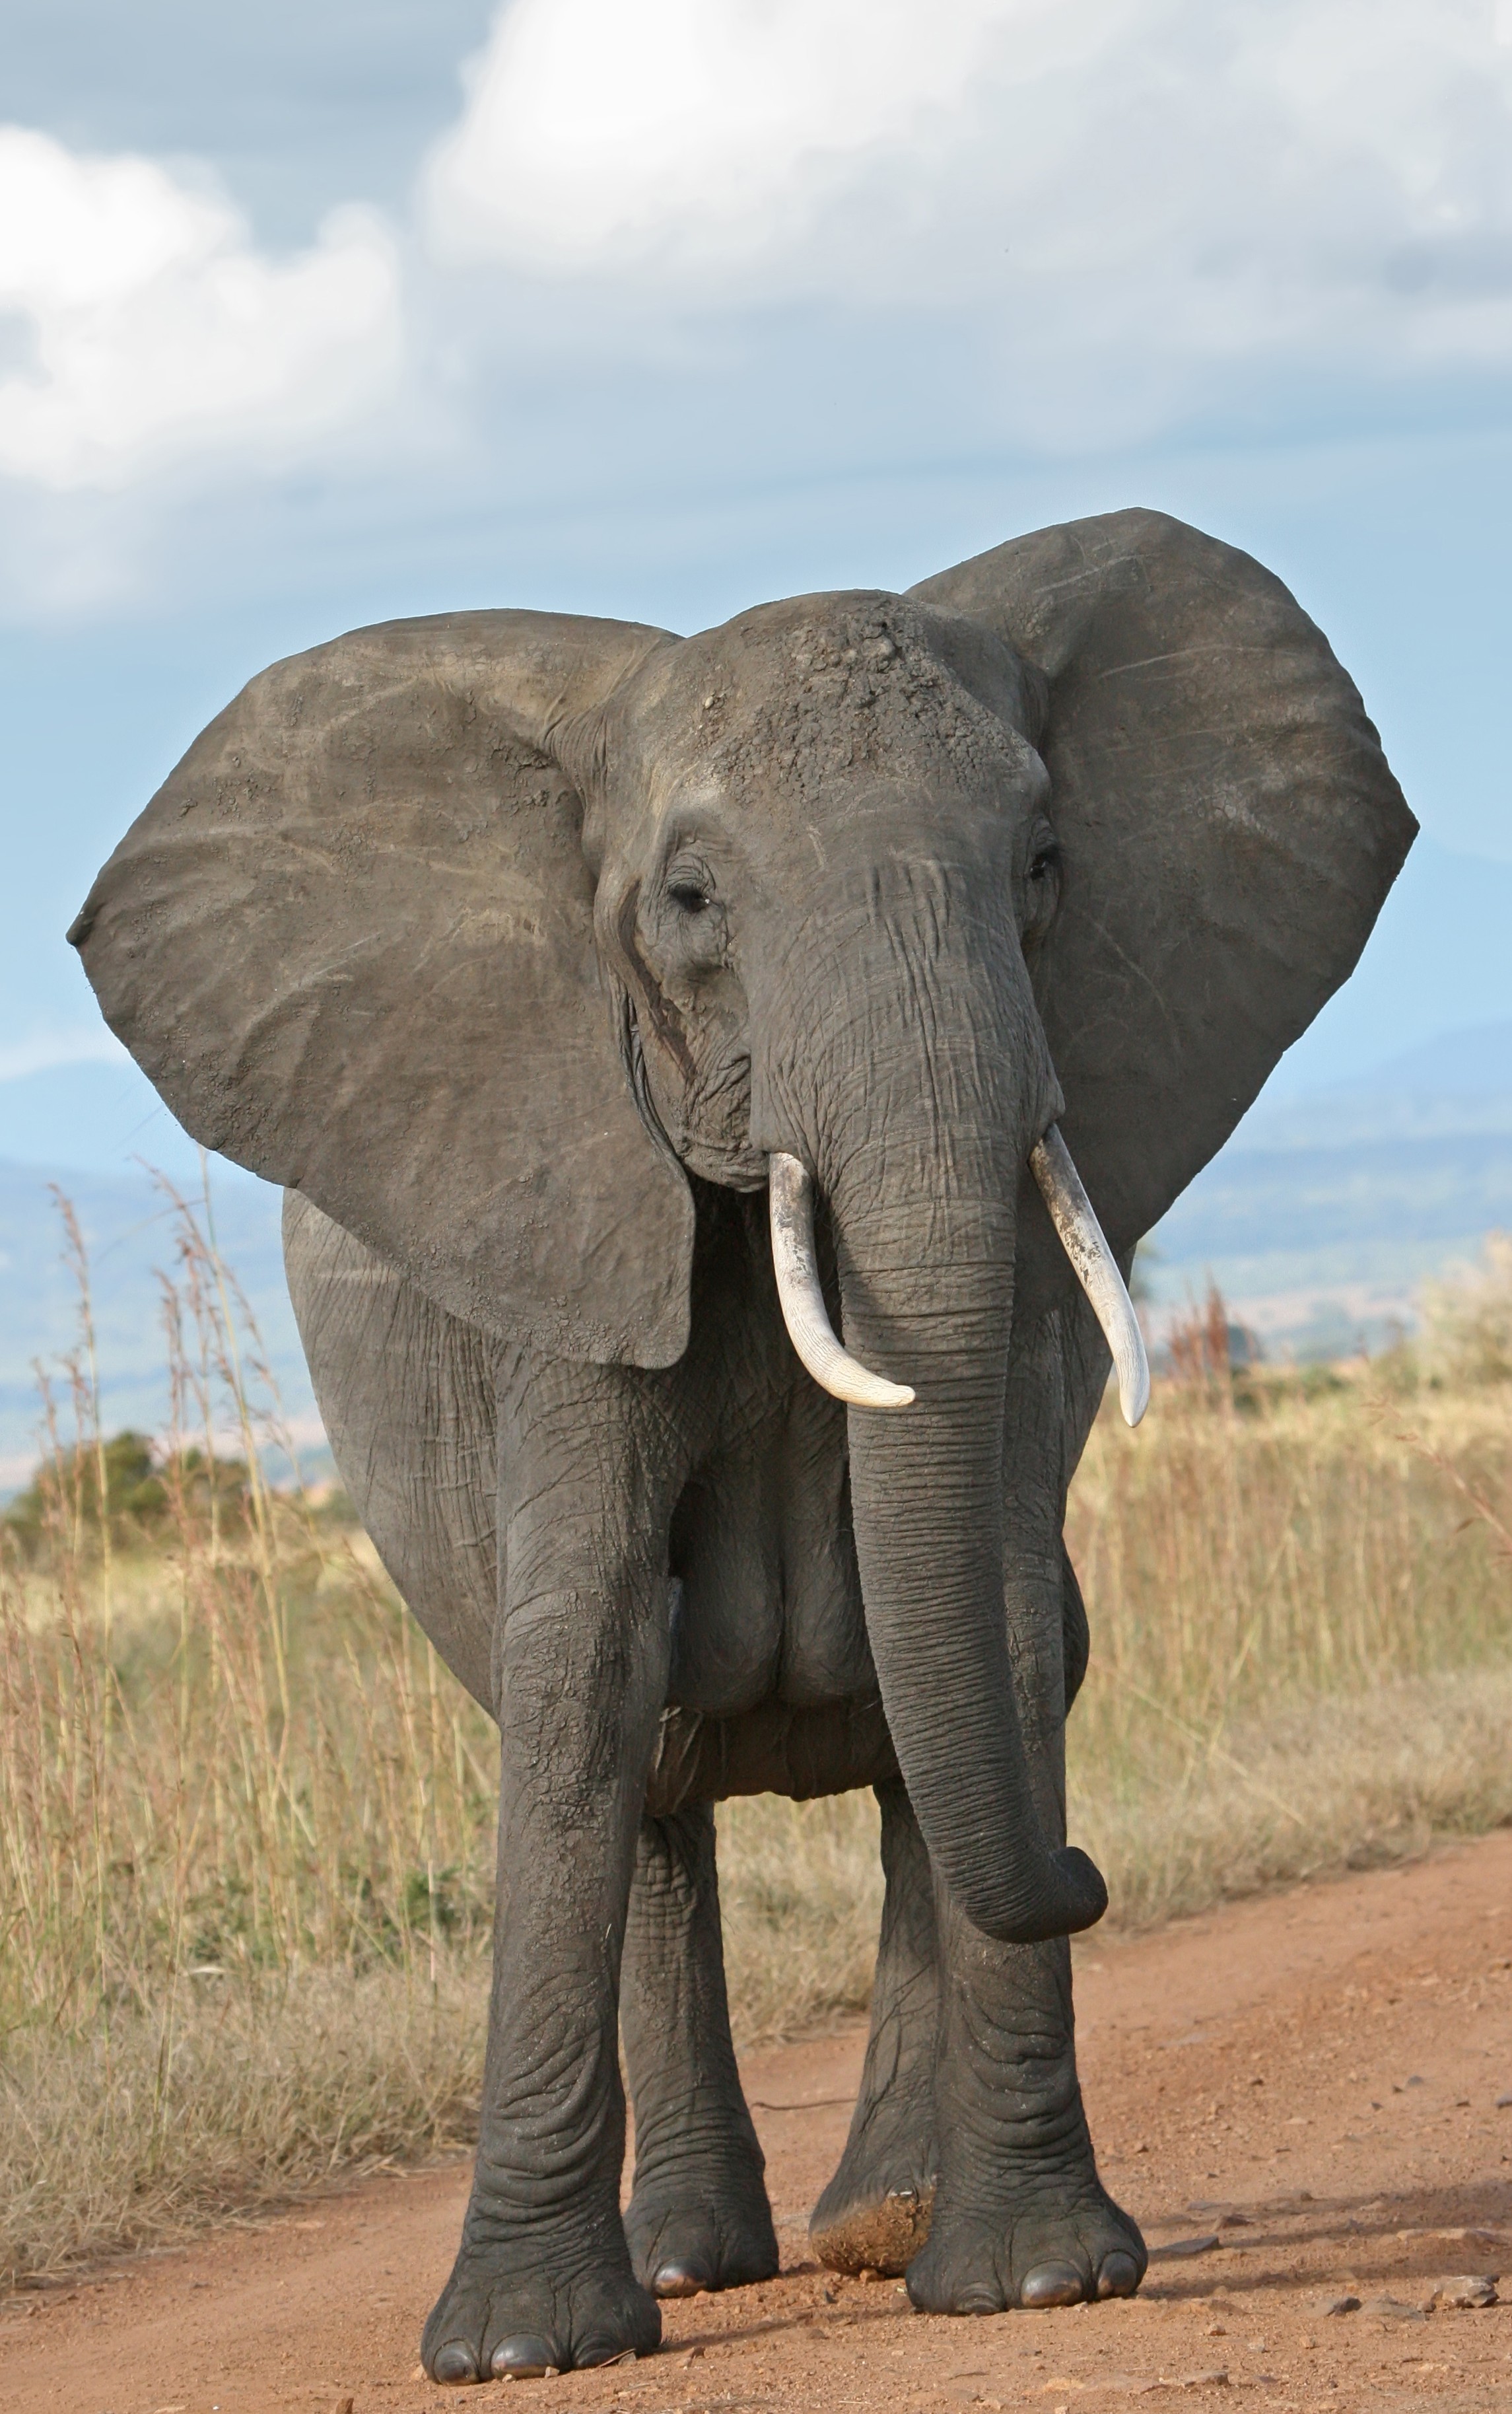 schöne freunde tapeten,elefant,elefanten und mammuts,landtier,indischer elefant,afrikanischer elefant